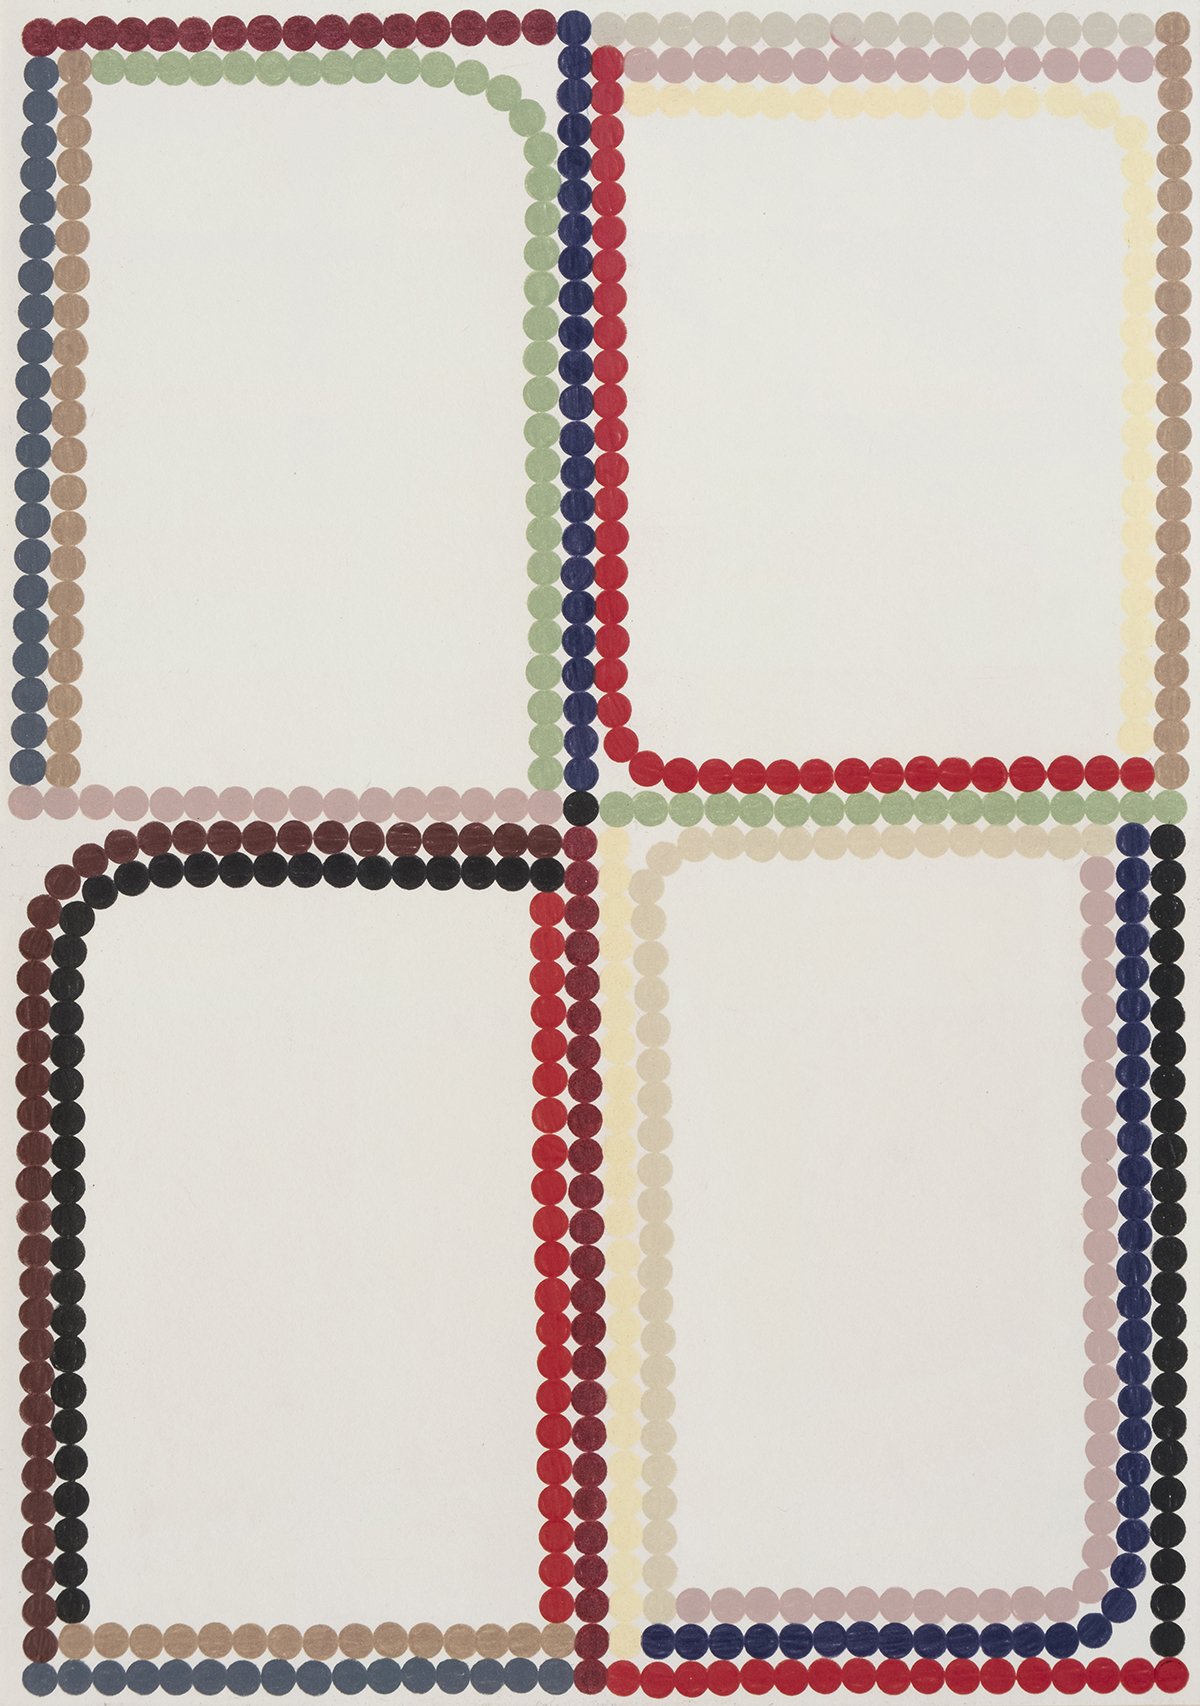  SABINE FINKENAUER “Perlas”, 2022. Pencil on paper. 42 x 29 cm 